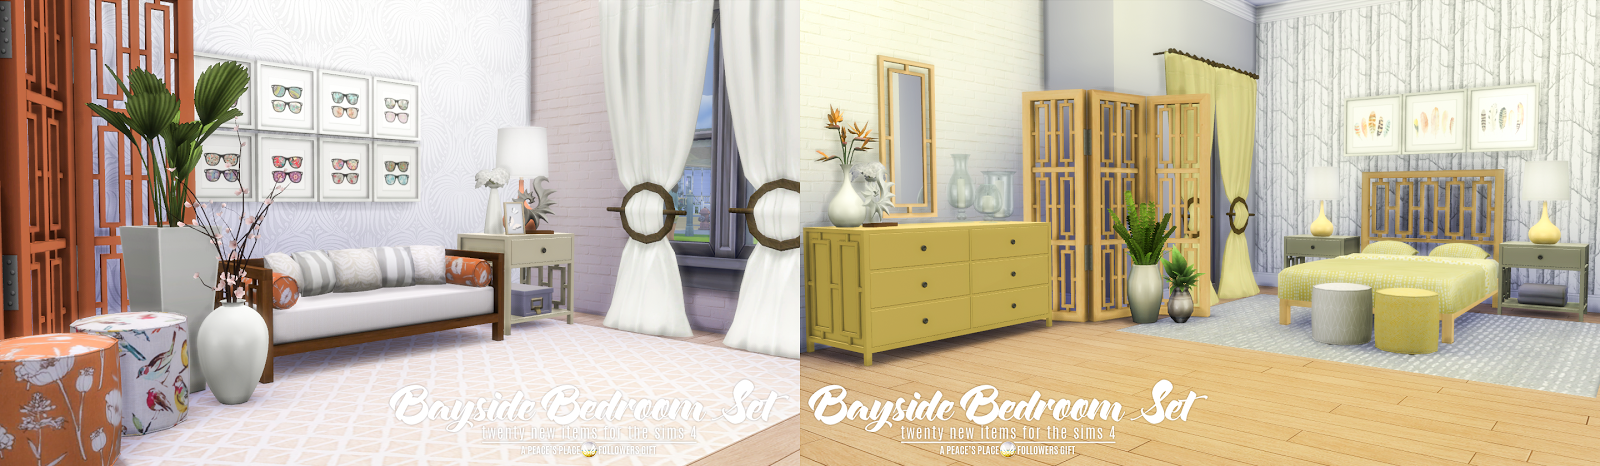 simsational designs: updated - bayside bedroom set